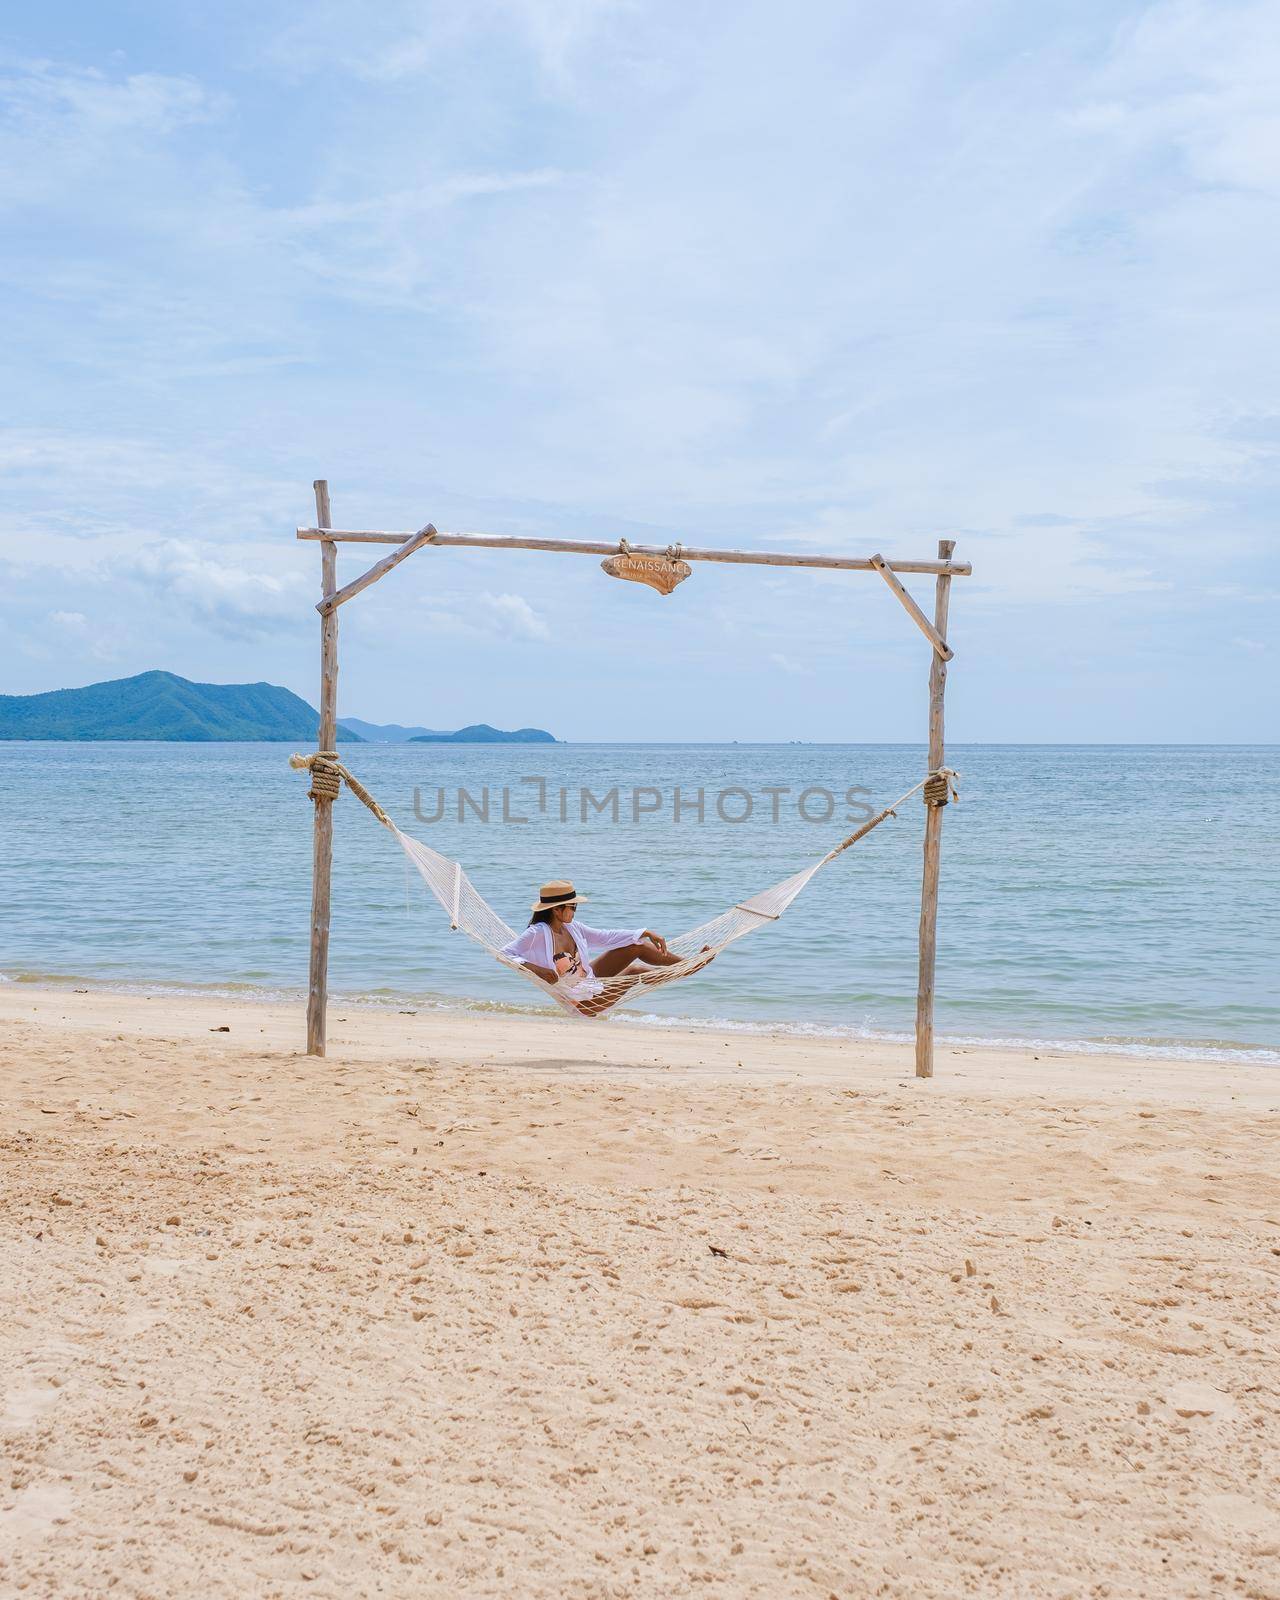 Women on the beach on a sunny day with a hammock on the beach in Pattaya Thailand Ban Amphur beach. Asian women on a tropical beach with palm trees and hammocks